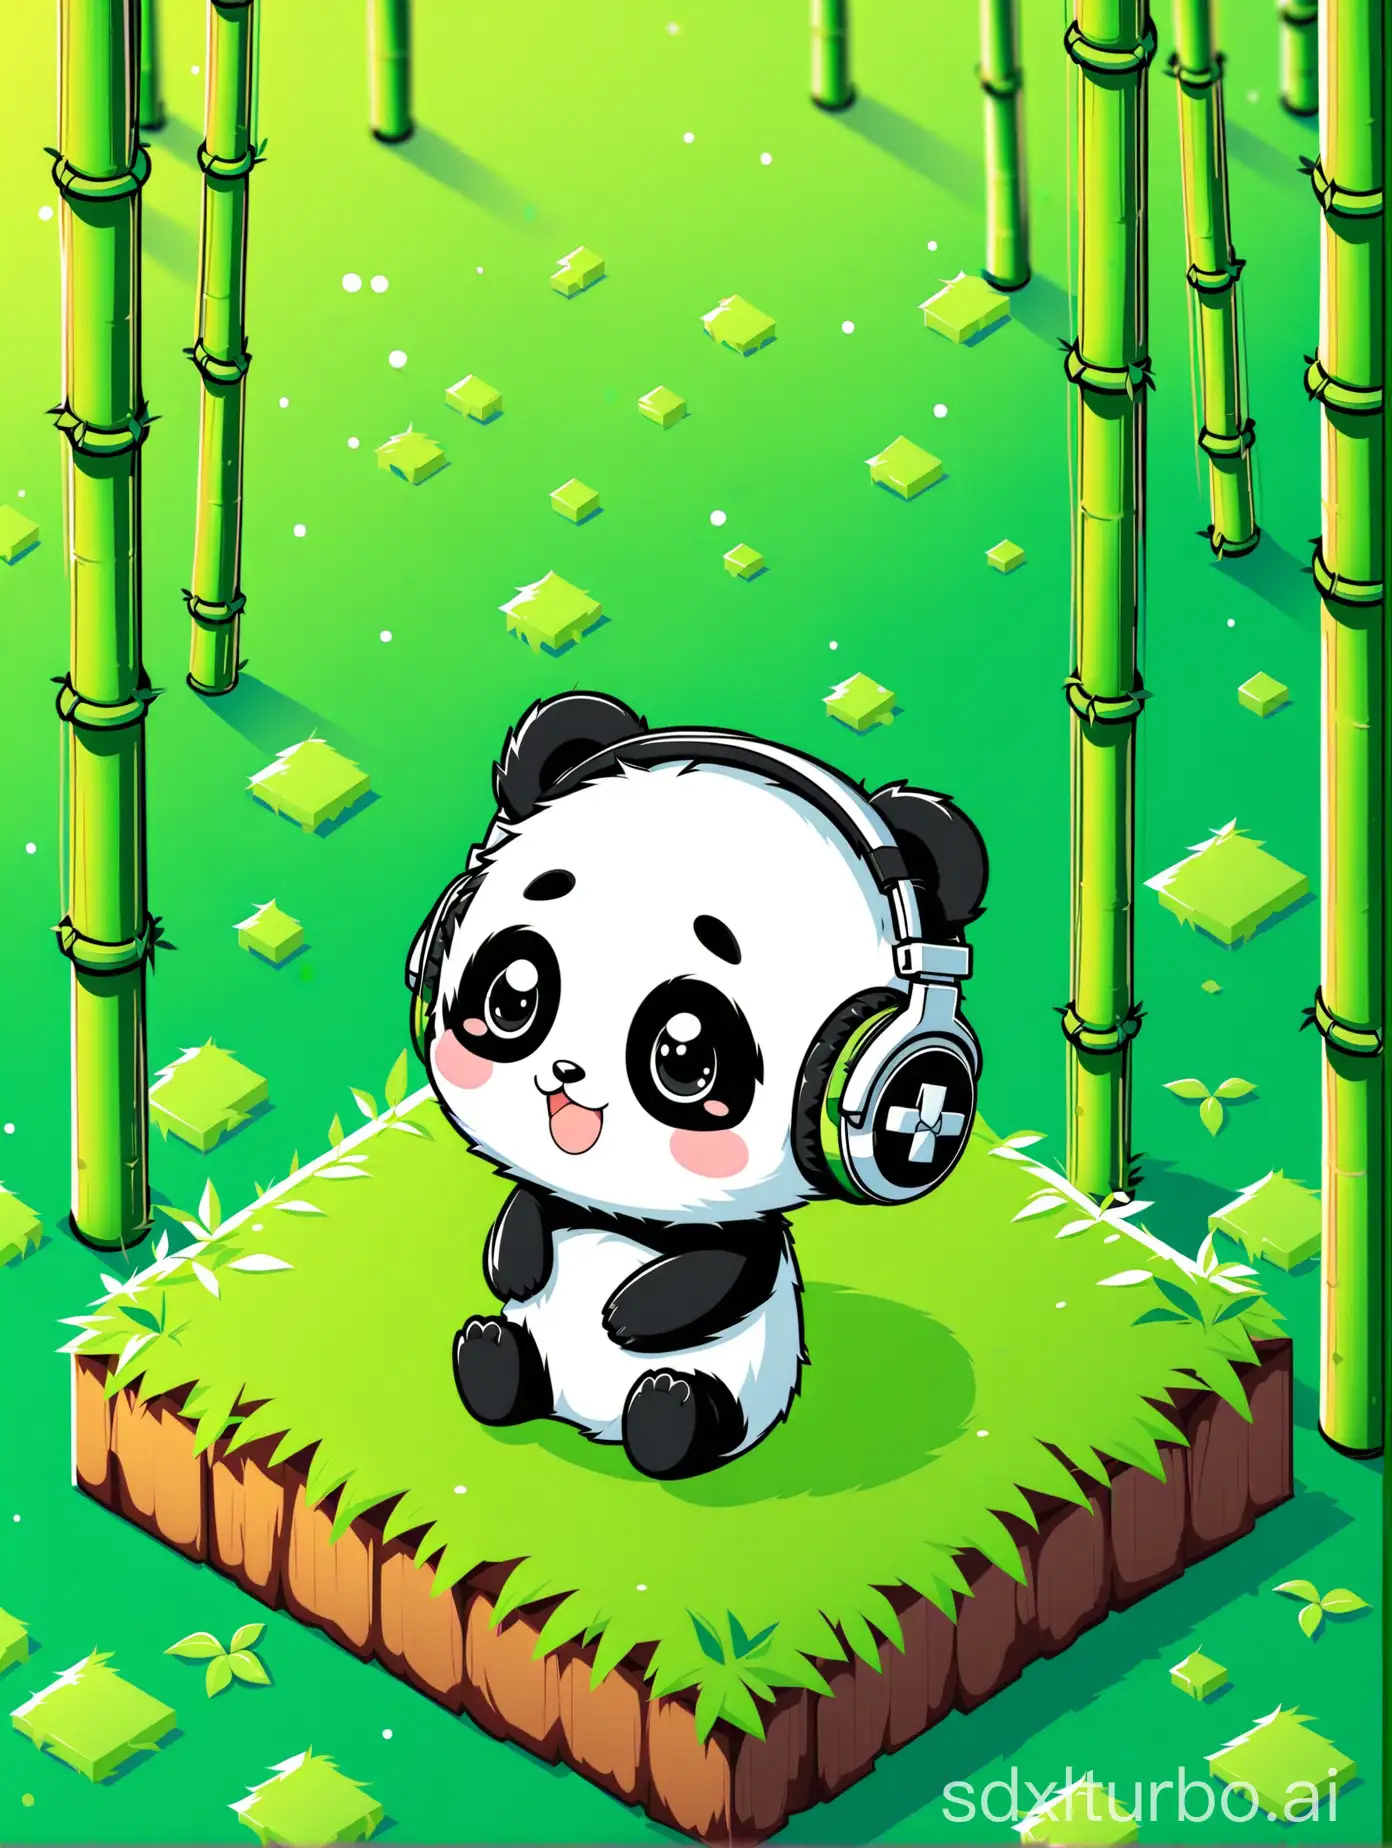 Adorable-Panda-Wearing-Headphones-in-Isometric-Bamboo-Forest-Scene